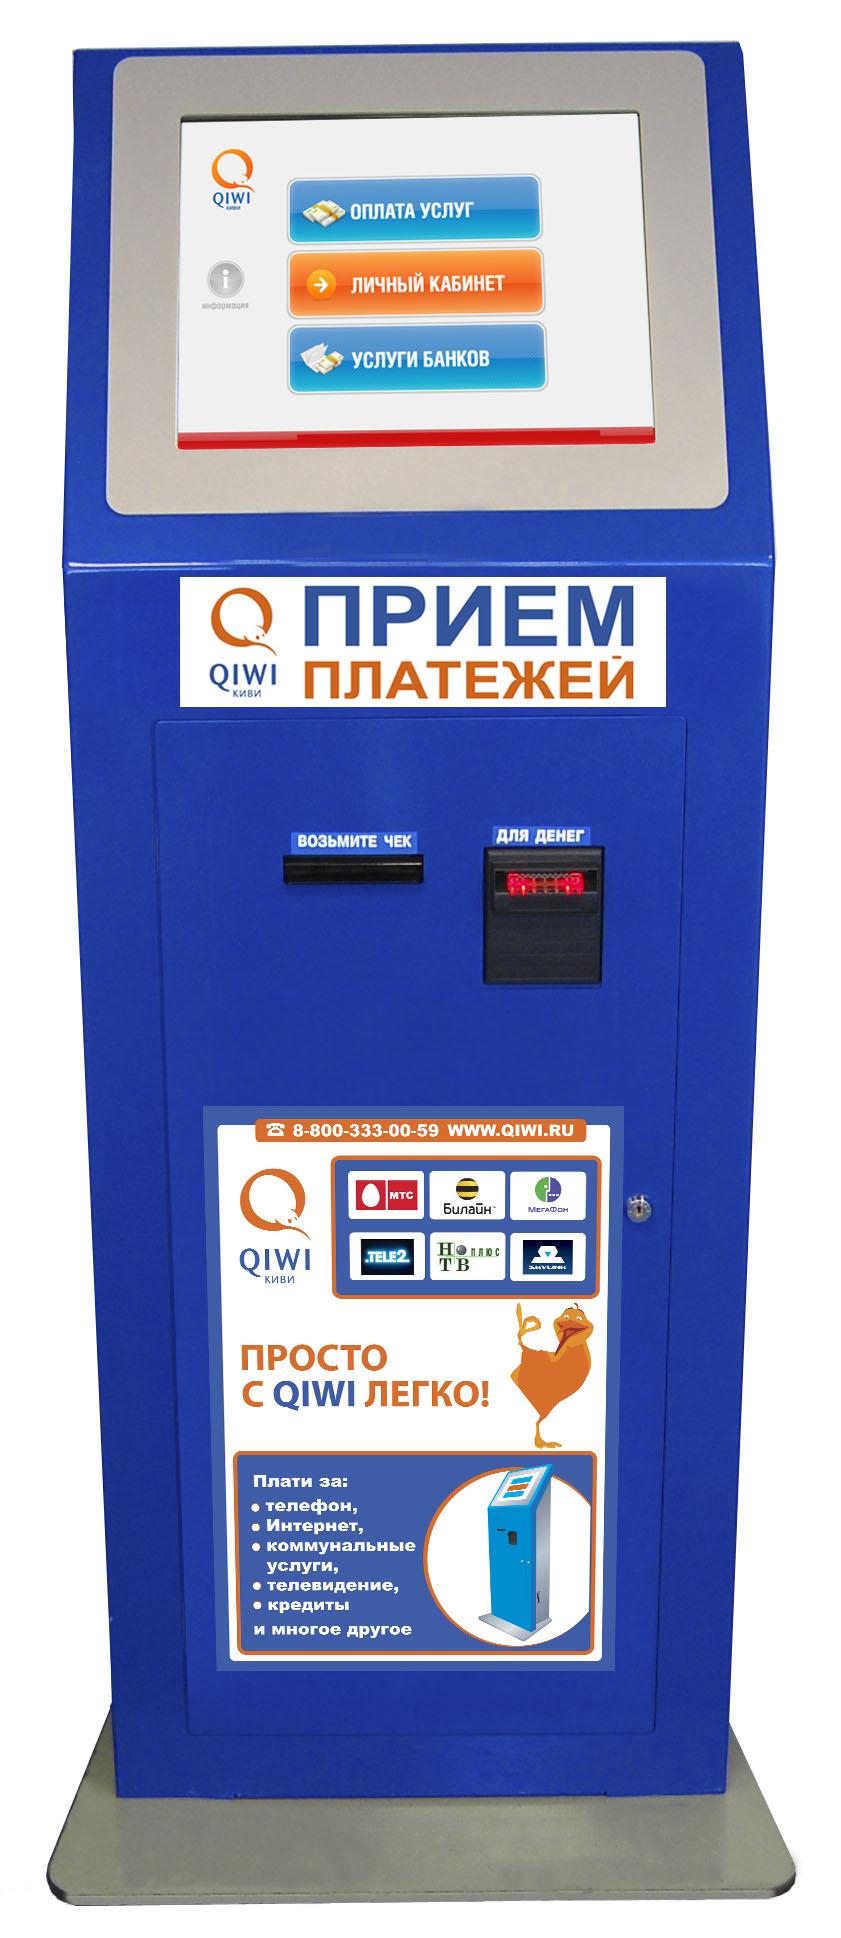 btc-o-matic.com Bitcoin ATM machine stealing design from http://www.qiwi.ro/ ? 